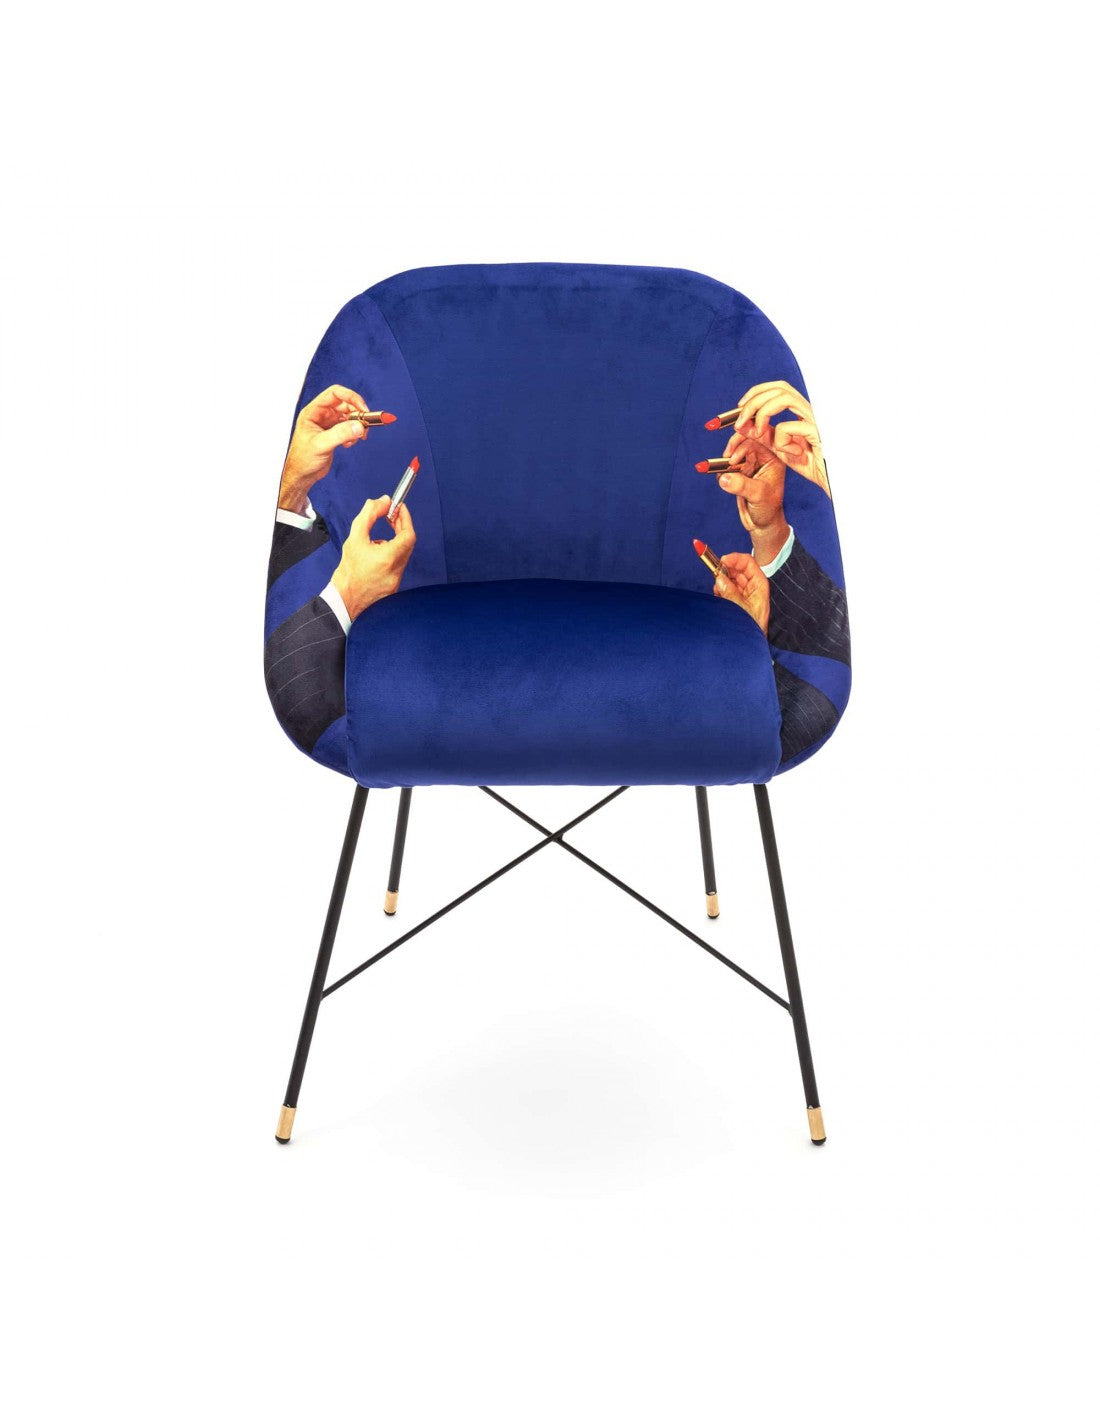 LIPSTICKS chair blue